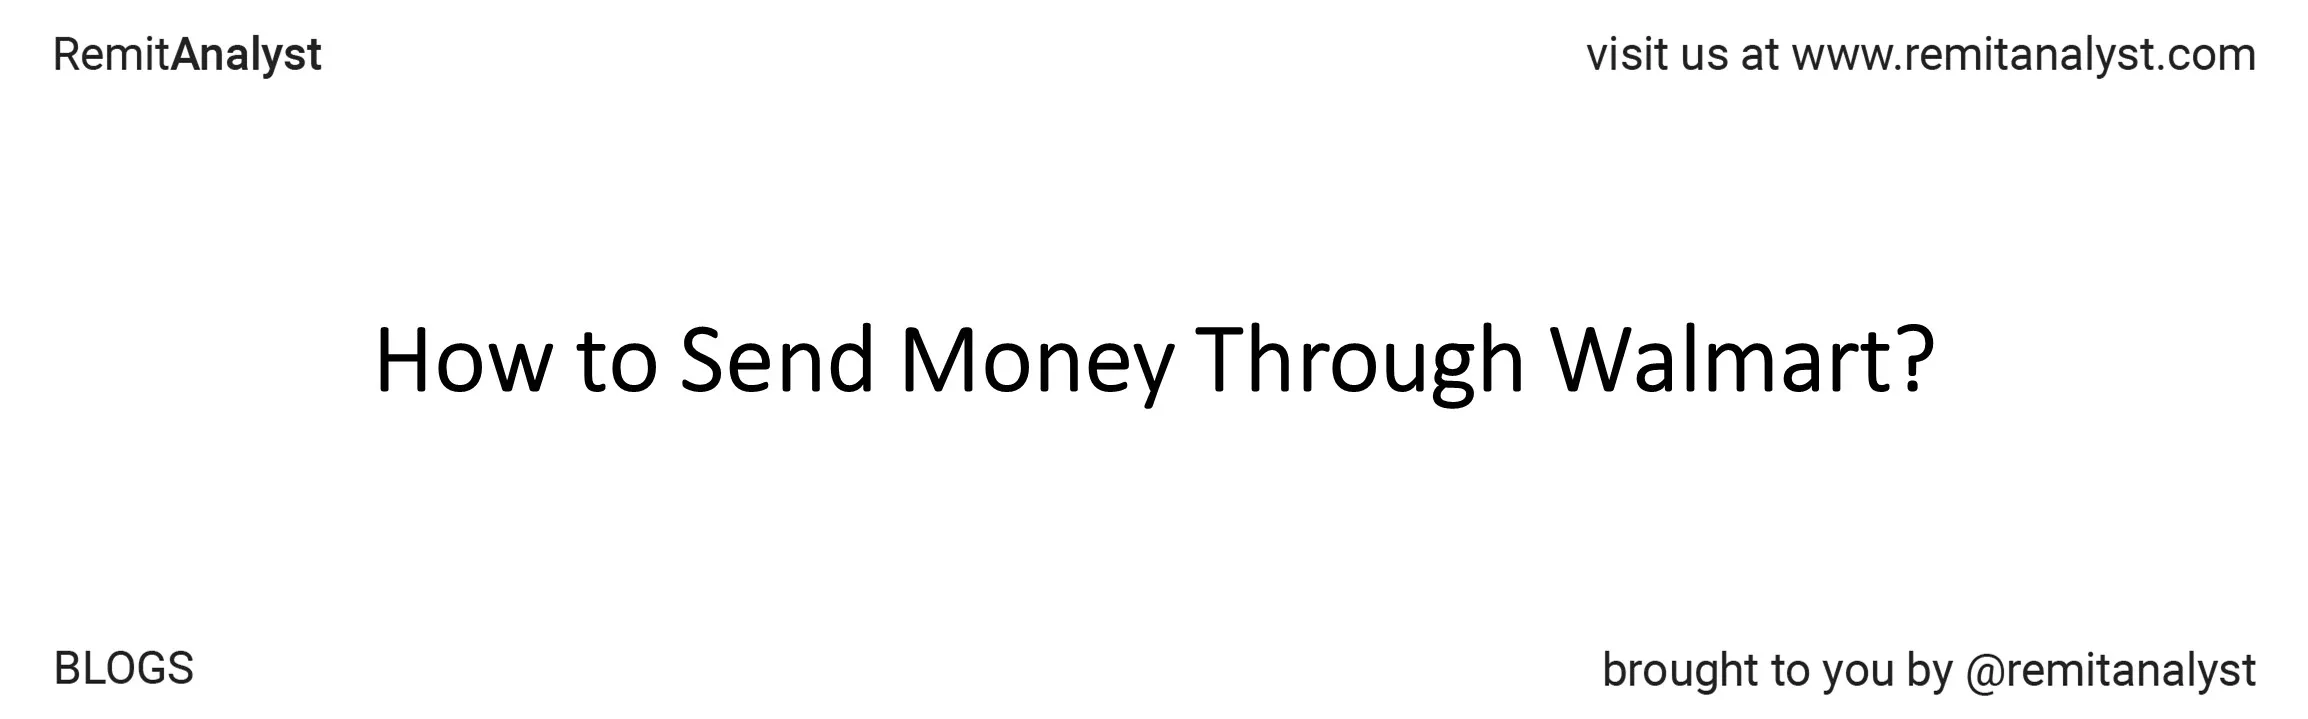 how-to-send-money-through-walmart-title